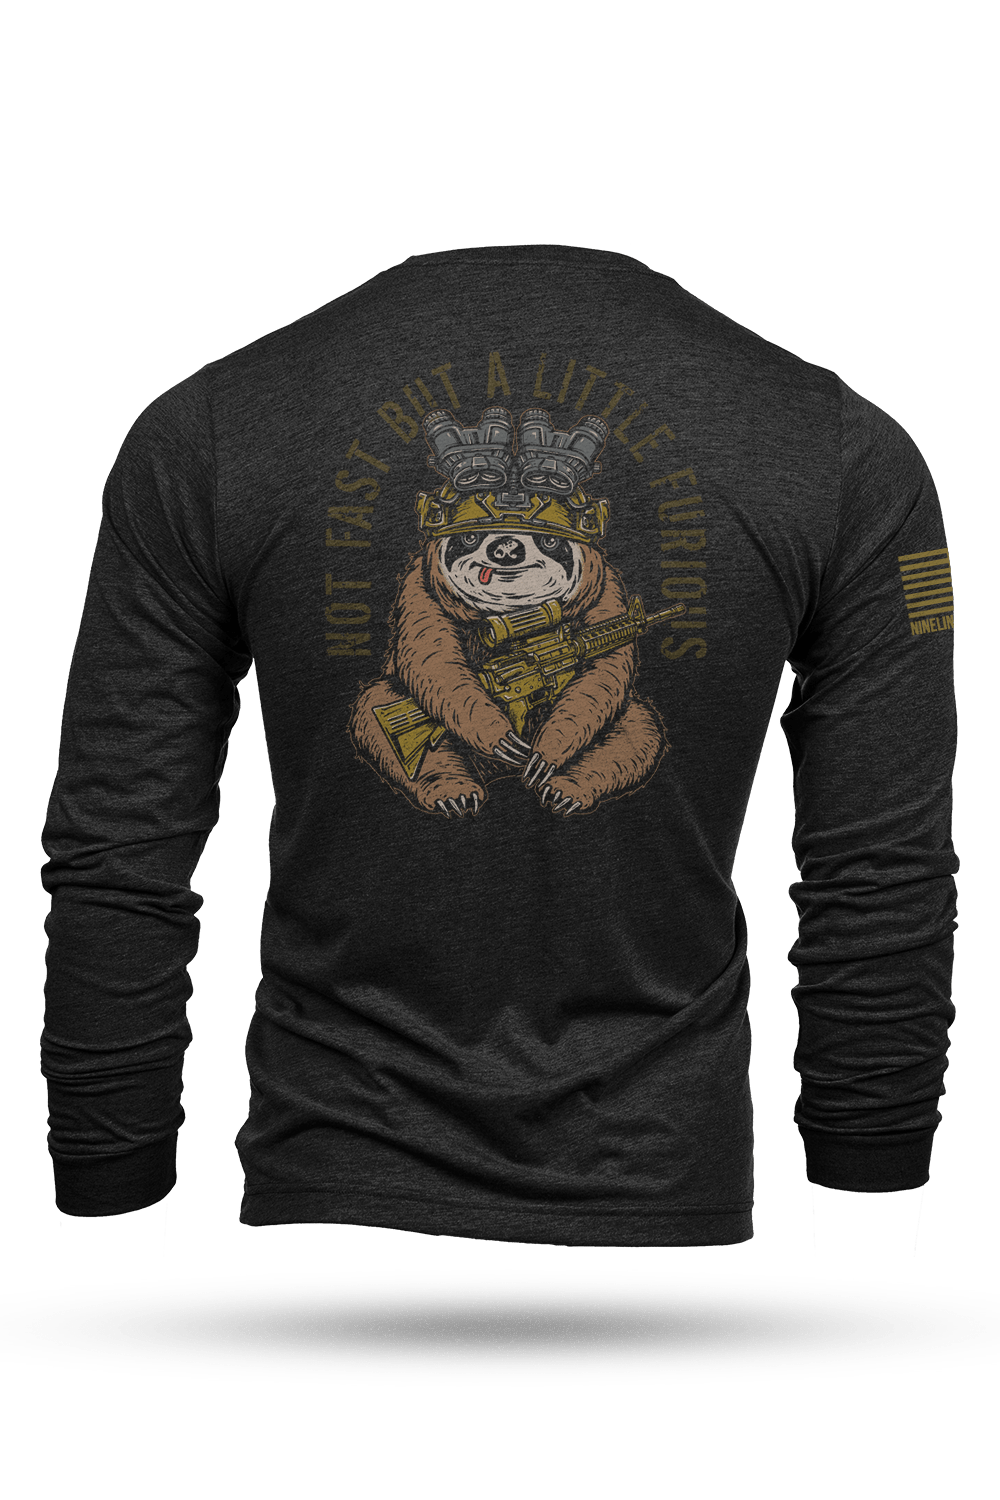 Long-Sleeve Shirt - Sloth